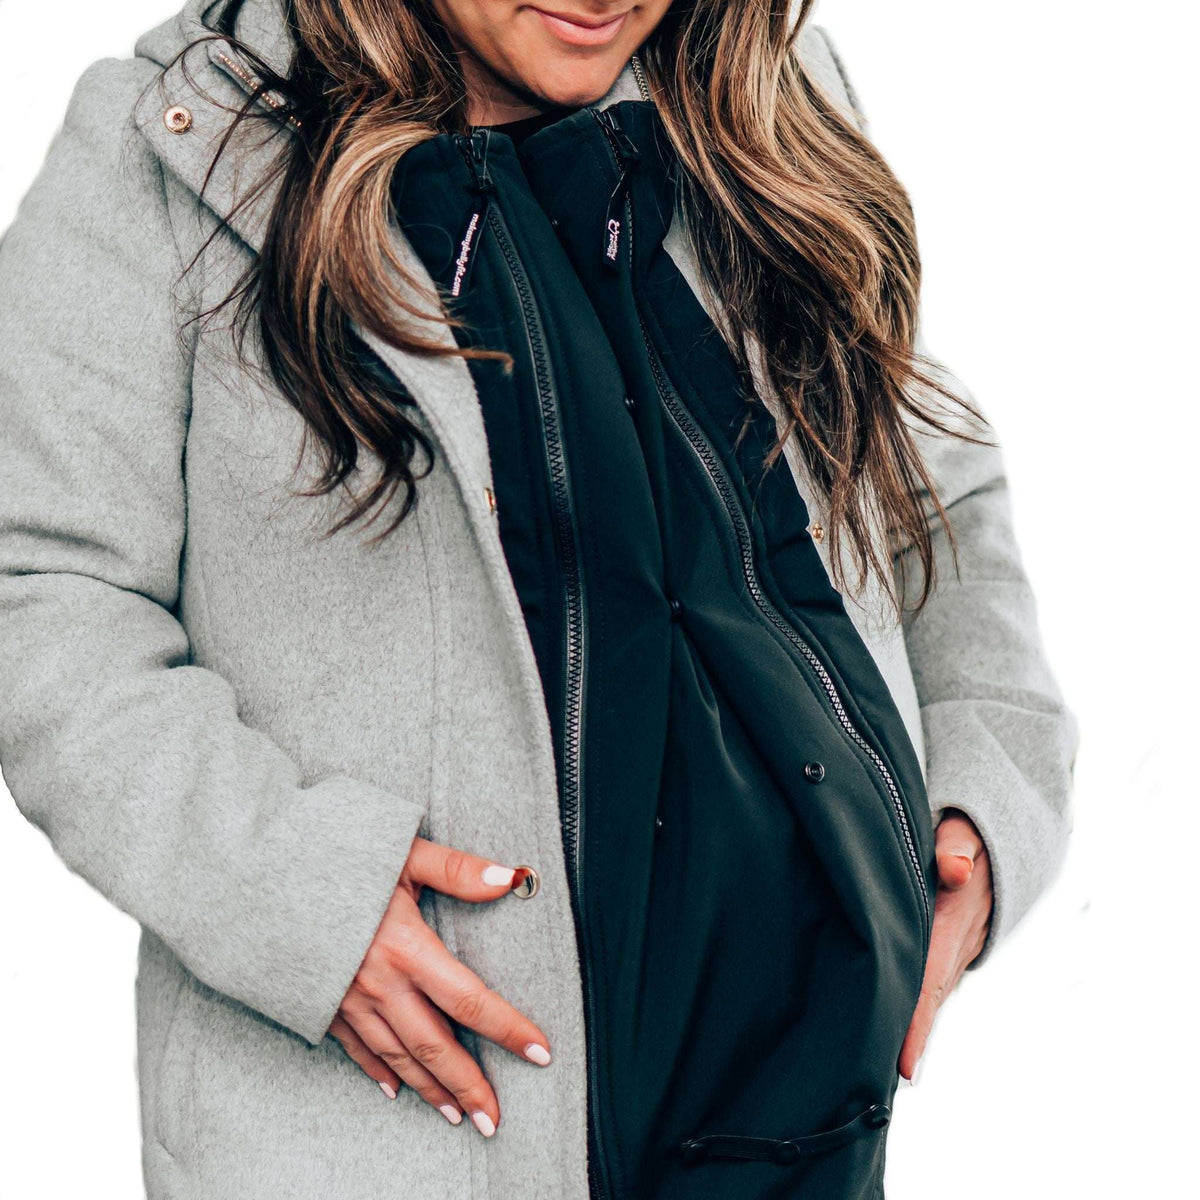 MakeMyBellyFit Maternity & Babywearing Universal Jacket Extender – Bellies  In Bloom